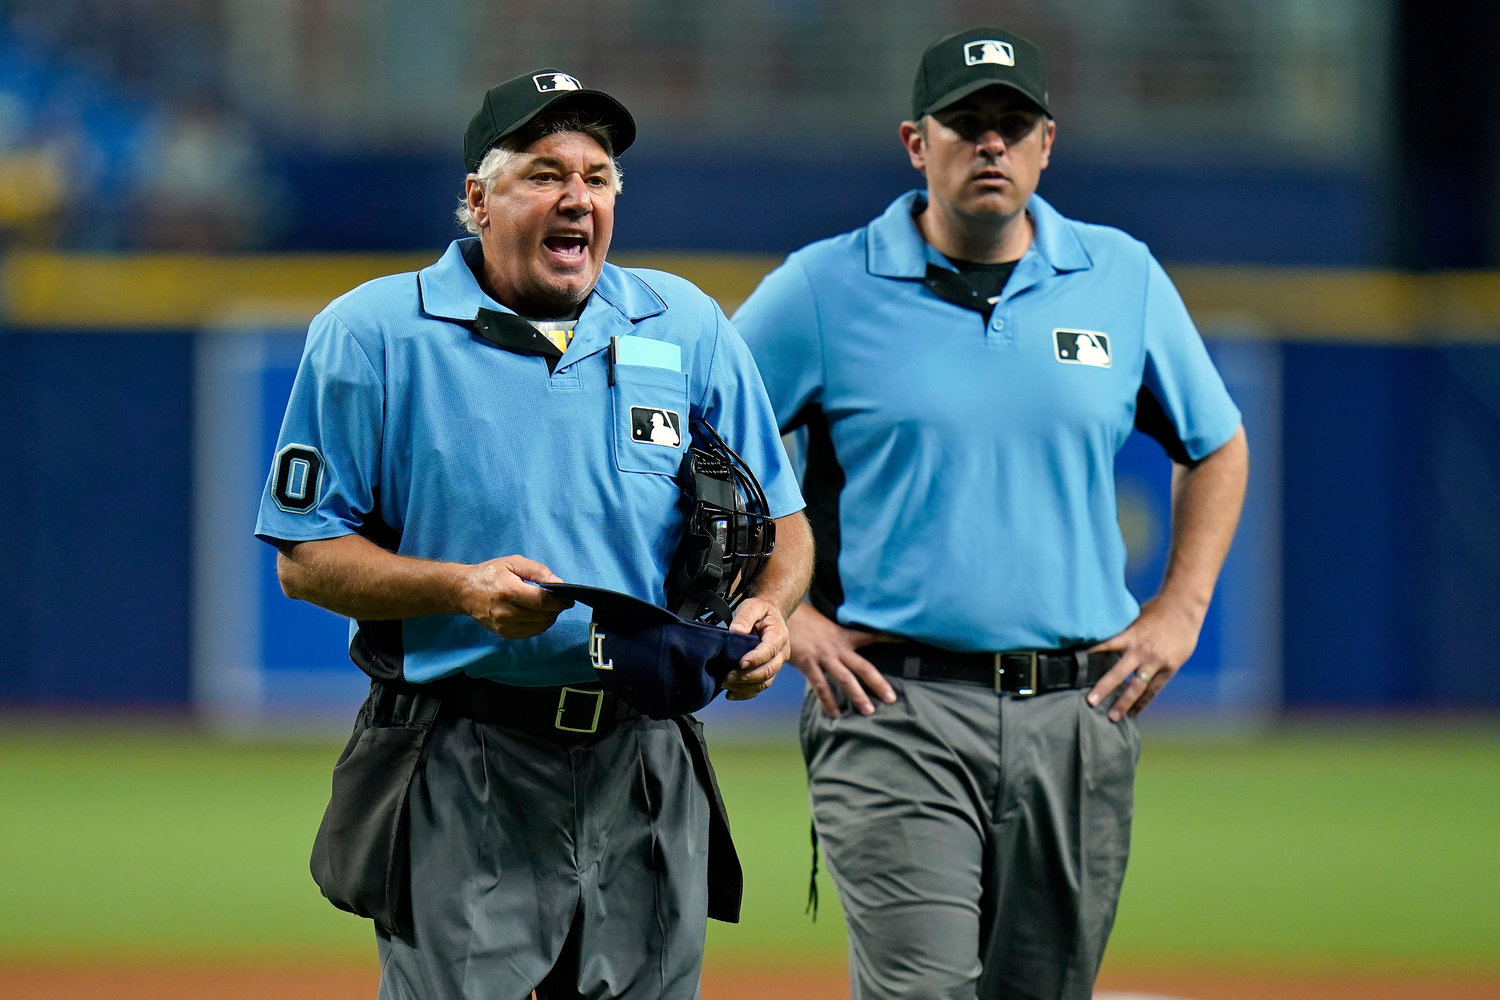 Explaining the FTX Patch worn by MLB Umpires  SportsLogosNet News